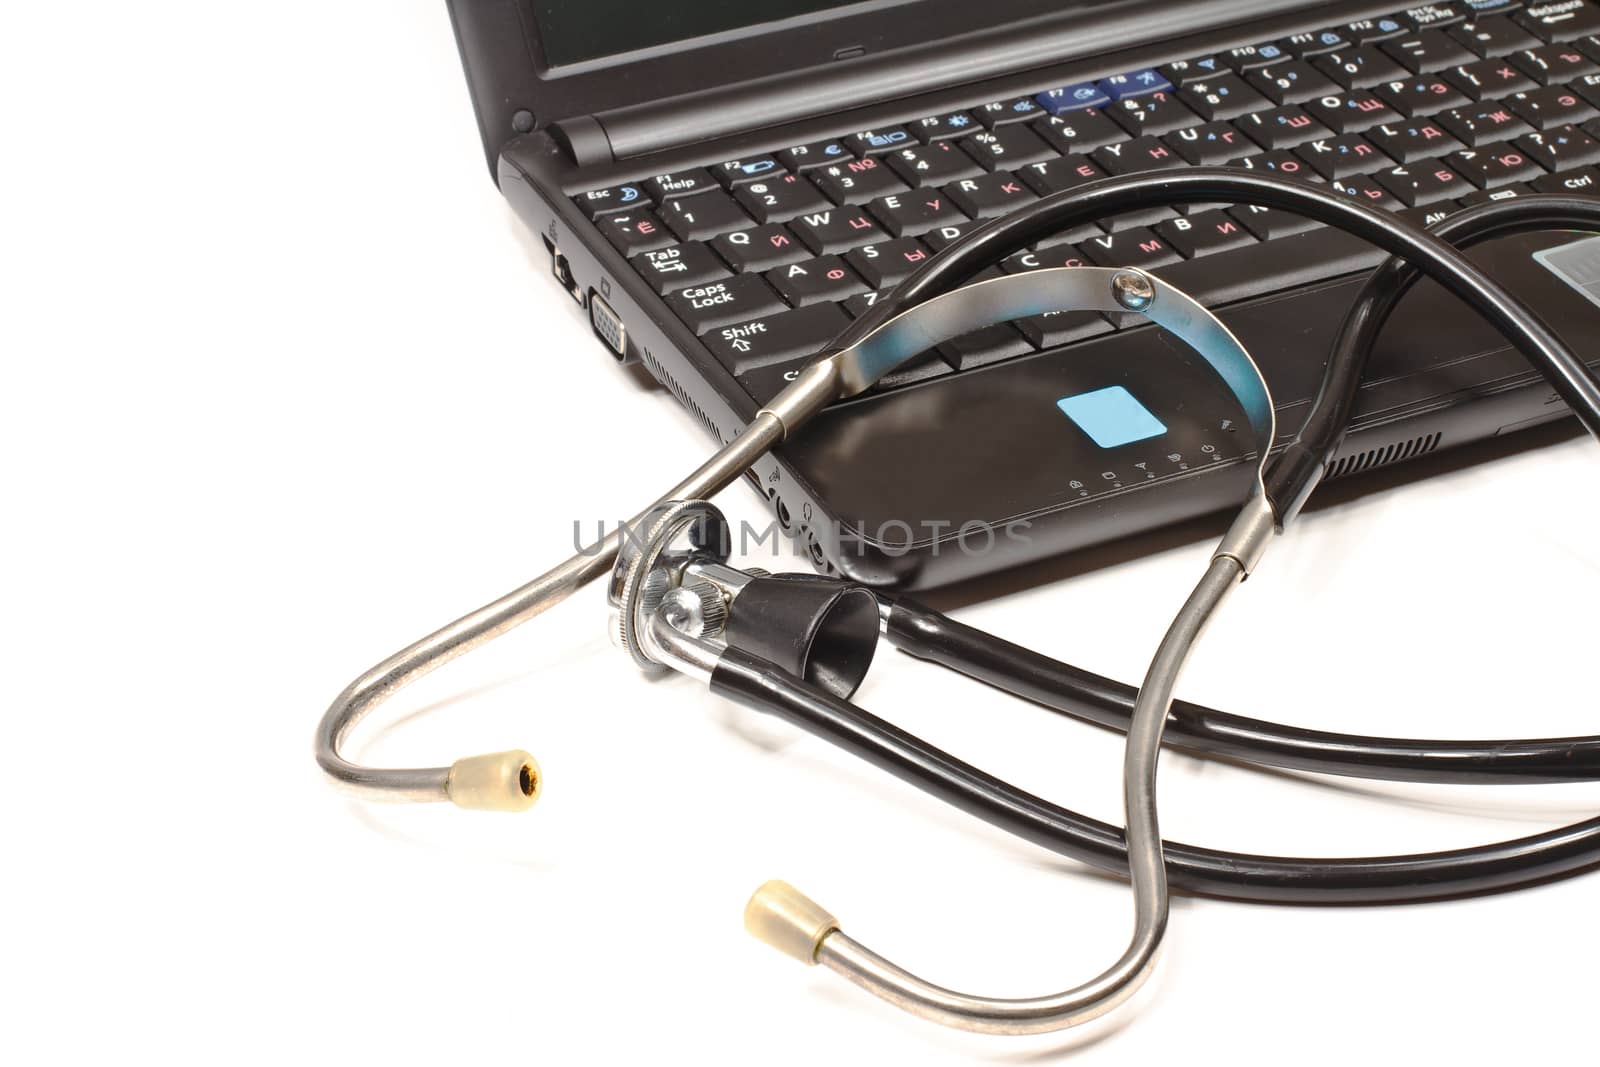 Stethoscope and laptop isolated on white background